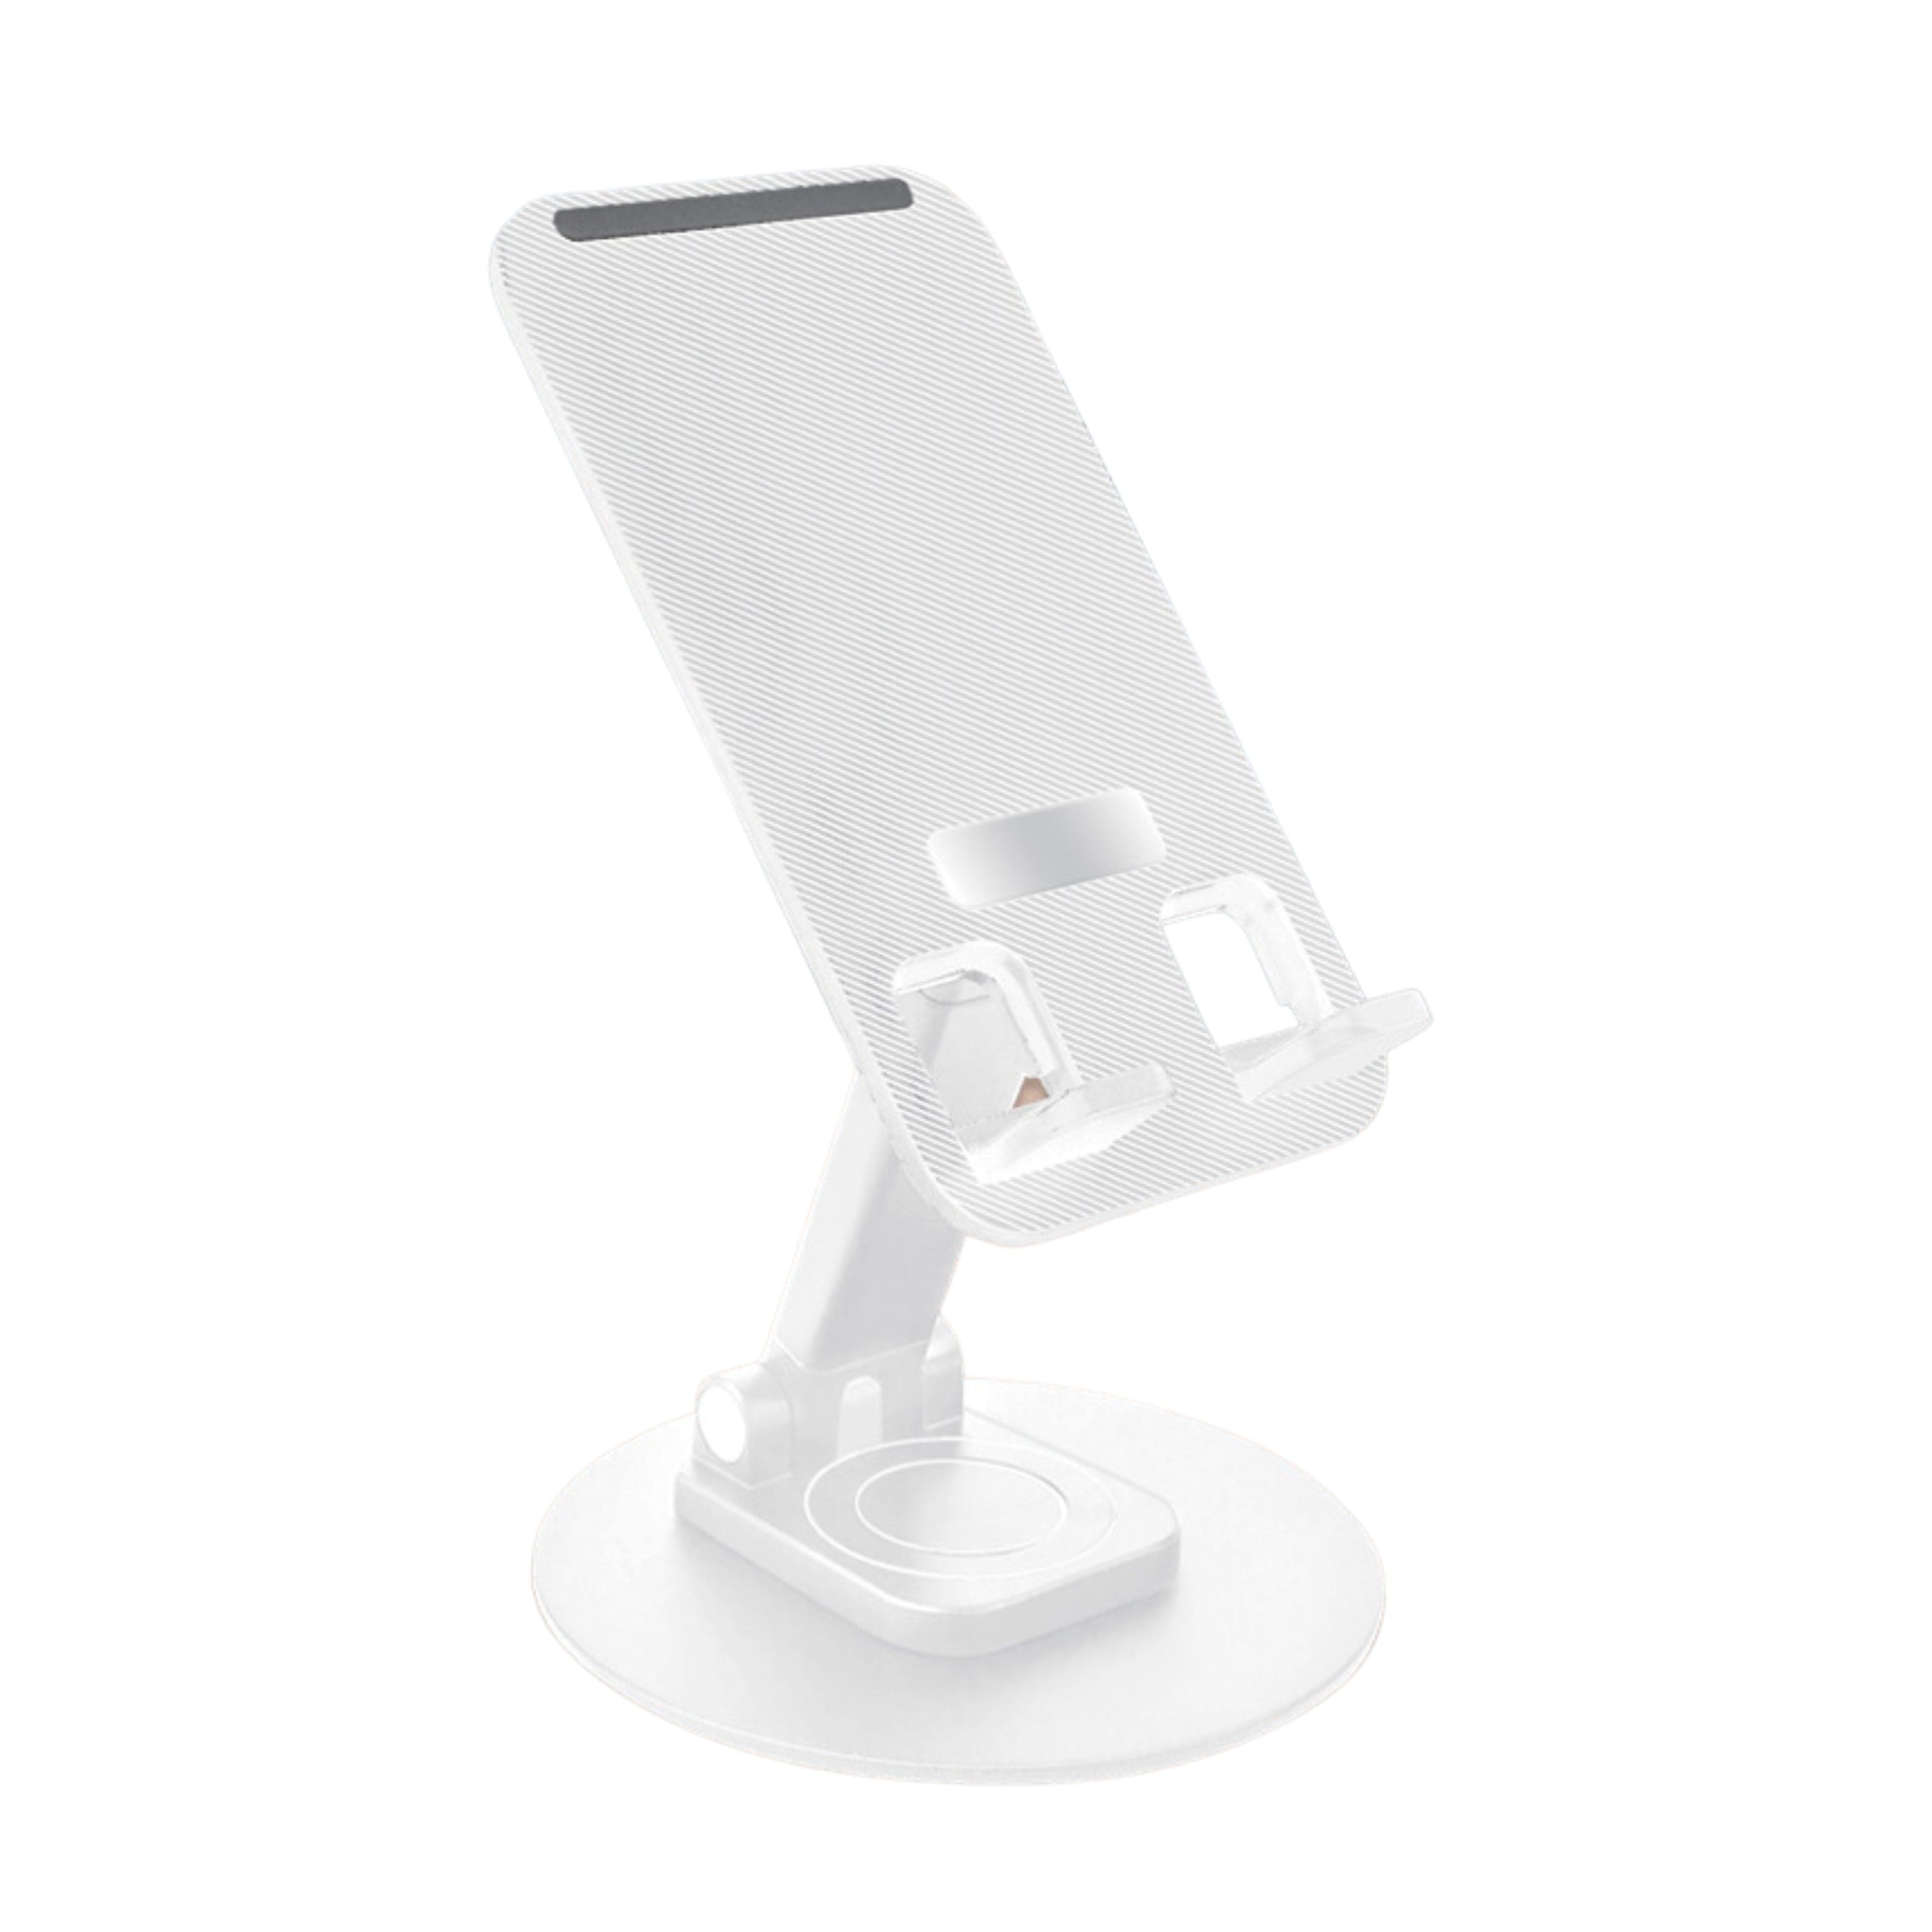 Mobi01 360° Mobile Stand, Adjustable Design